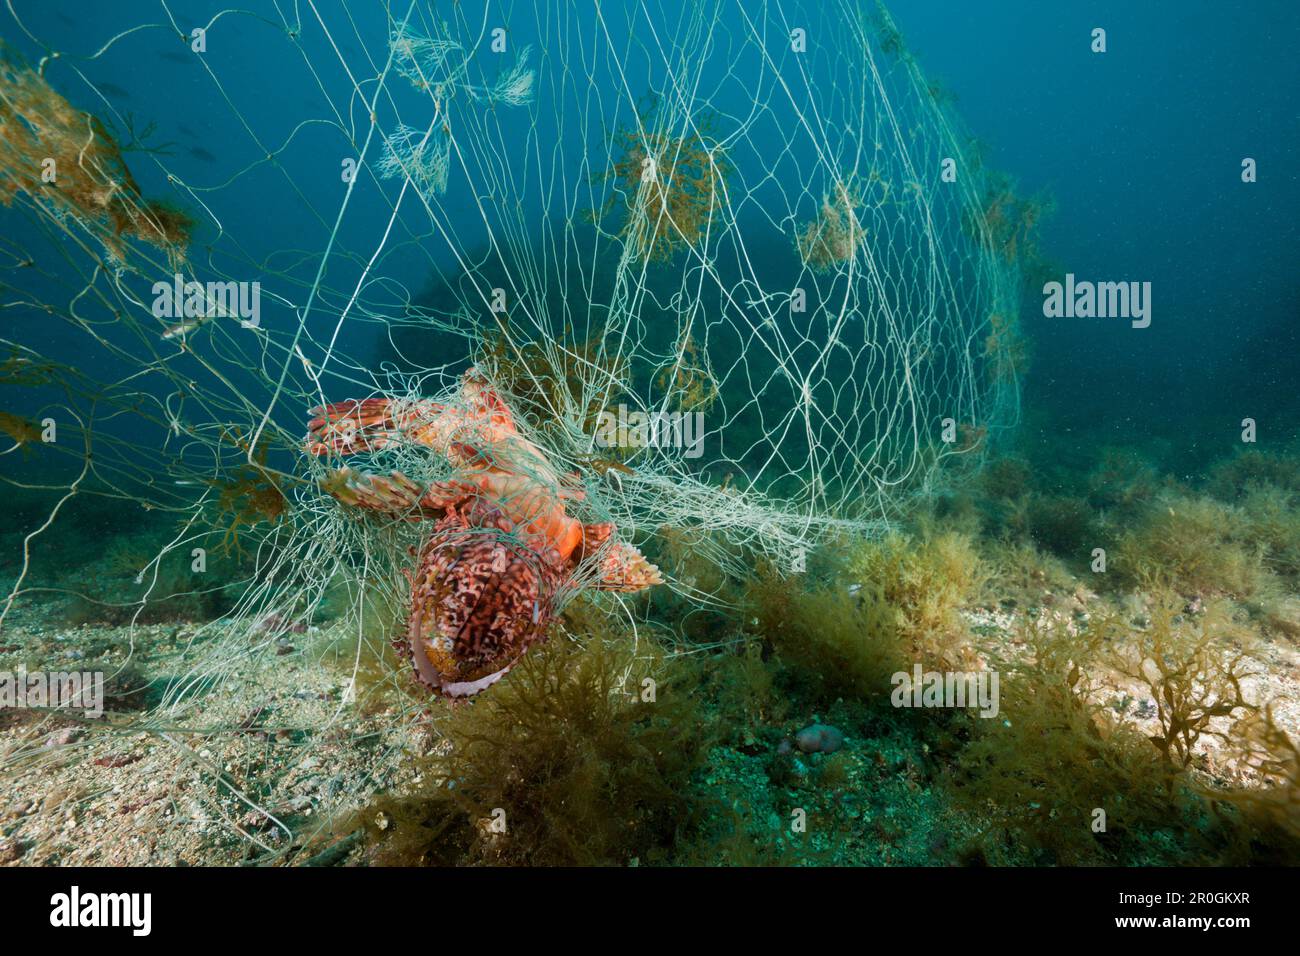 Rockfish trapped in lost Fishing Net, Scorpaena scrofa, Cap de Creus, Costa Brava, Spain Stock Photo